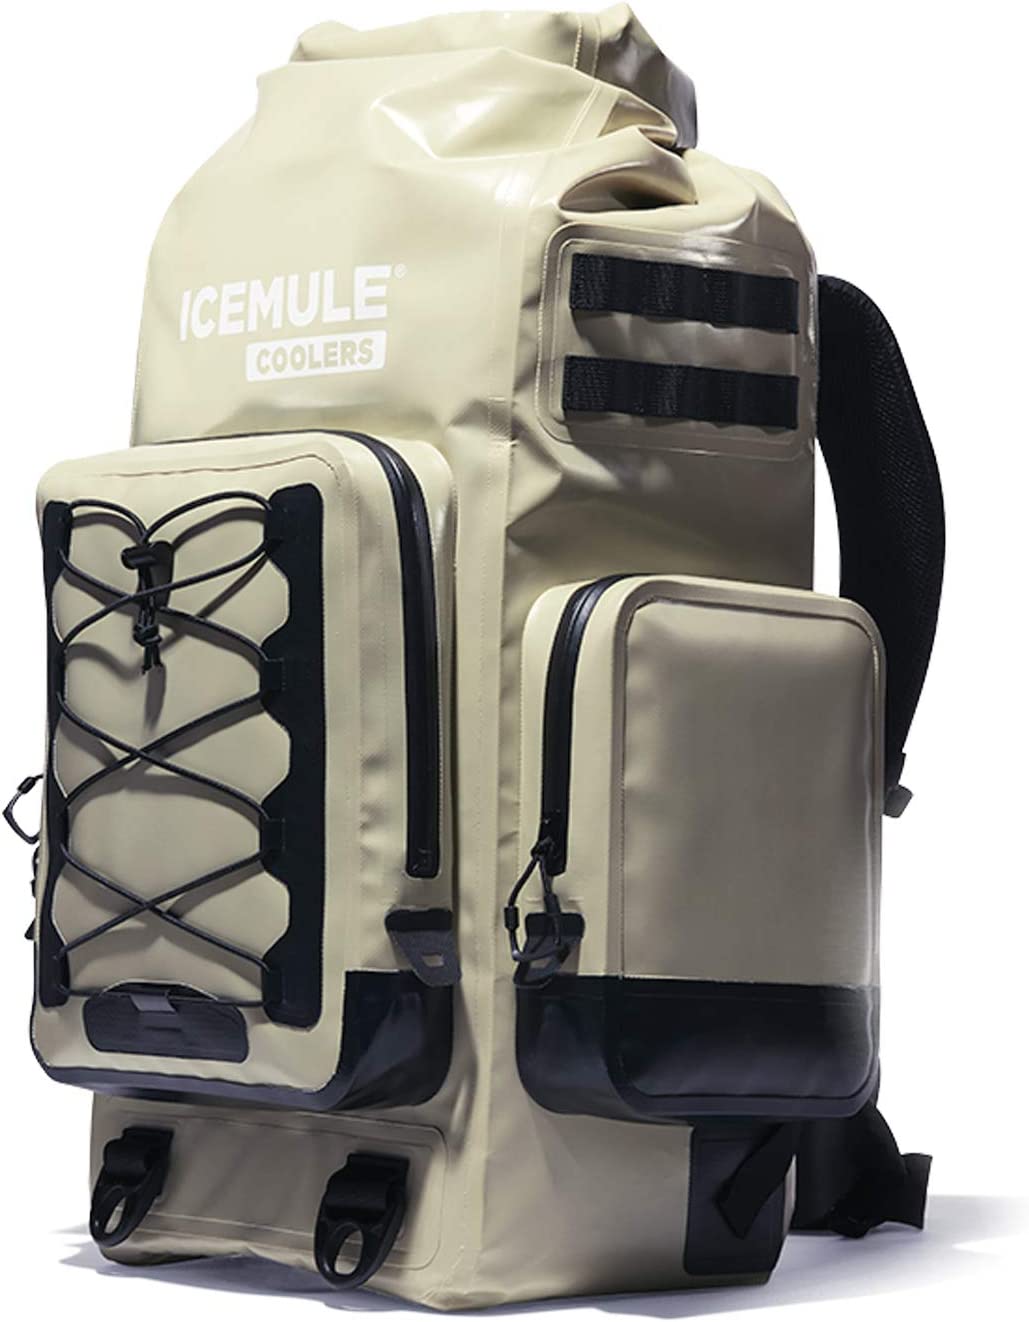 ICEMULE Boss backpack cooler